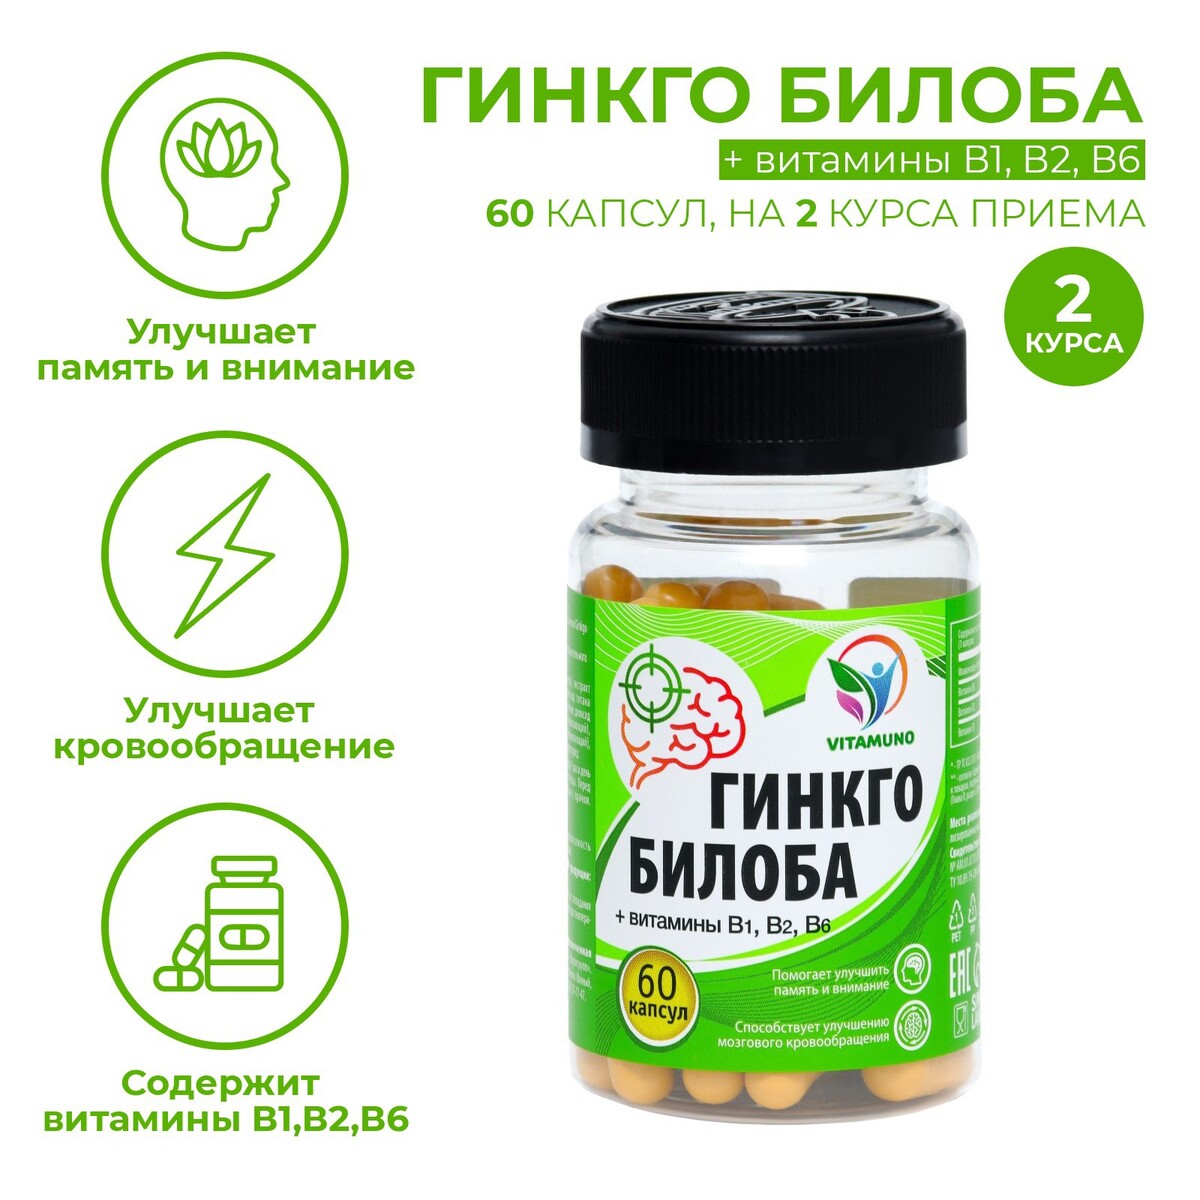 Гинкго билоба ангио, 60 капсул по 500 мг Vitamuno